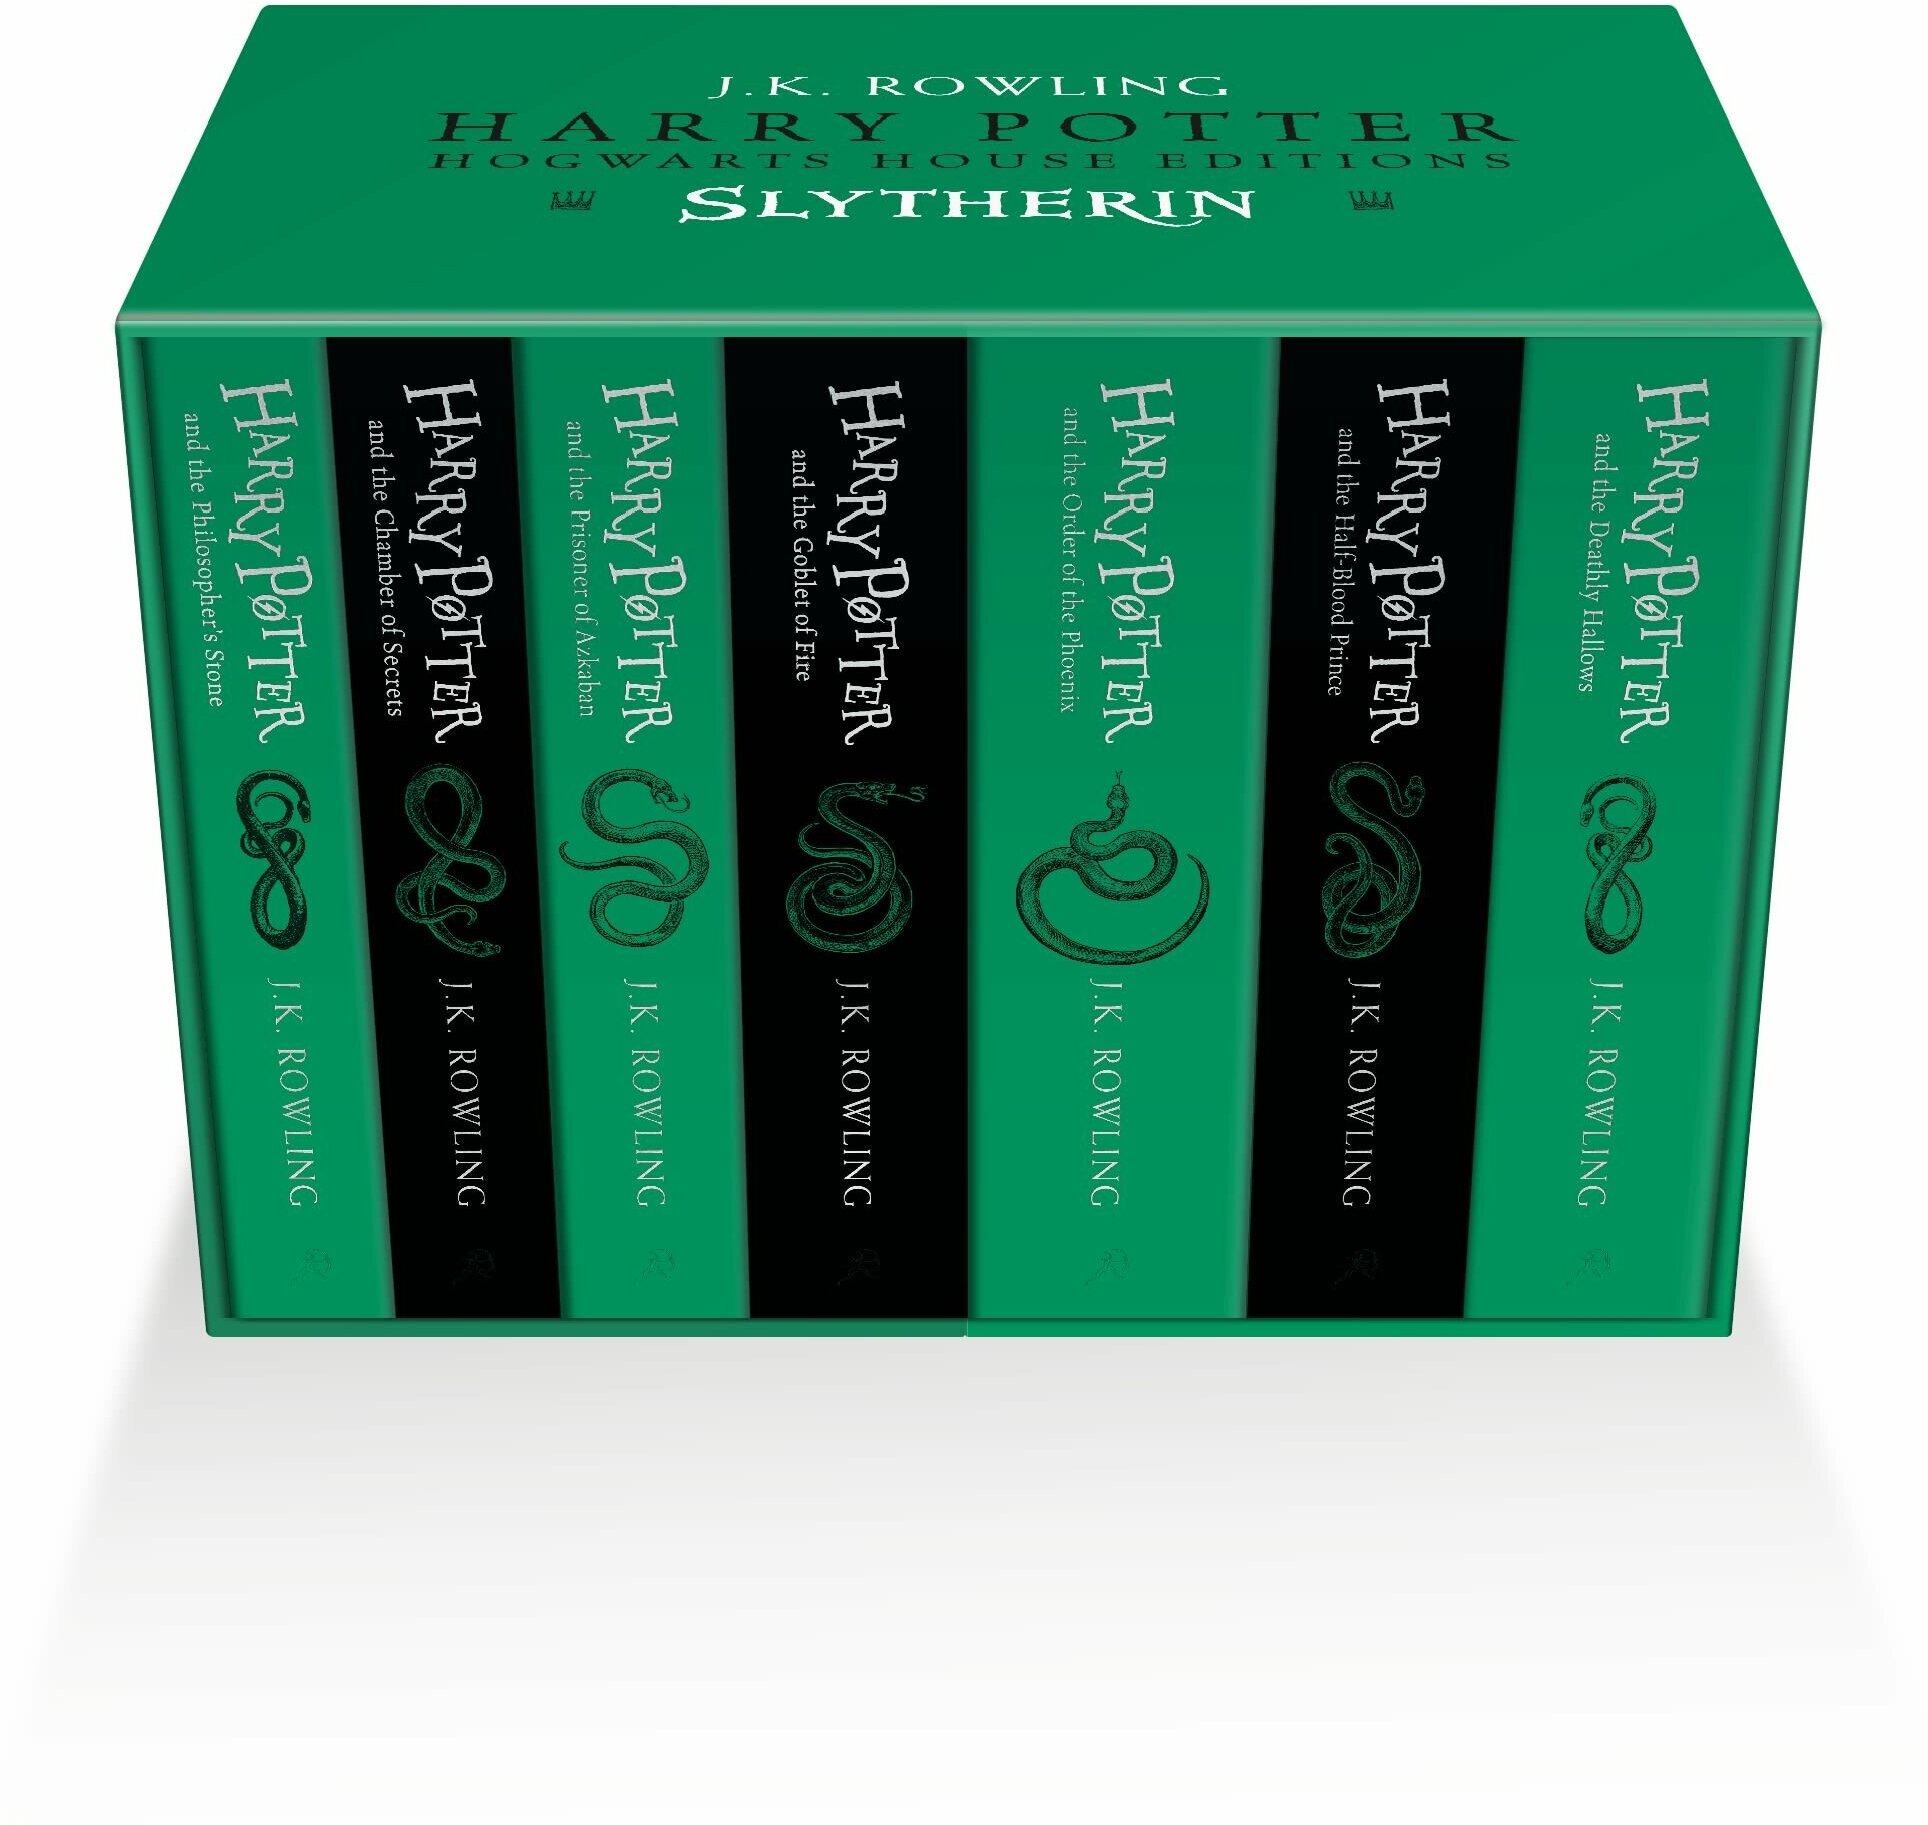 Harry Potter Slytherin House Editions Paperback Box Set комплект из 7 книг - фото №1